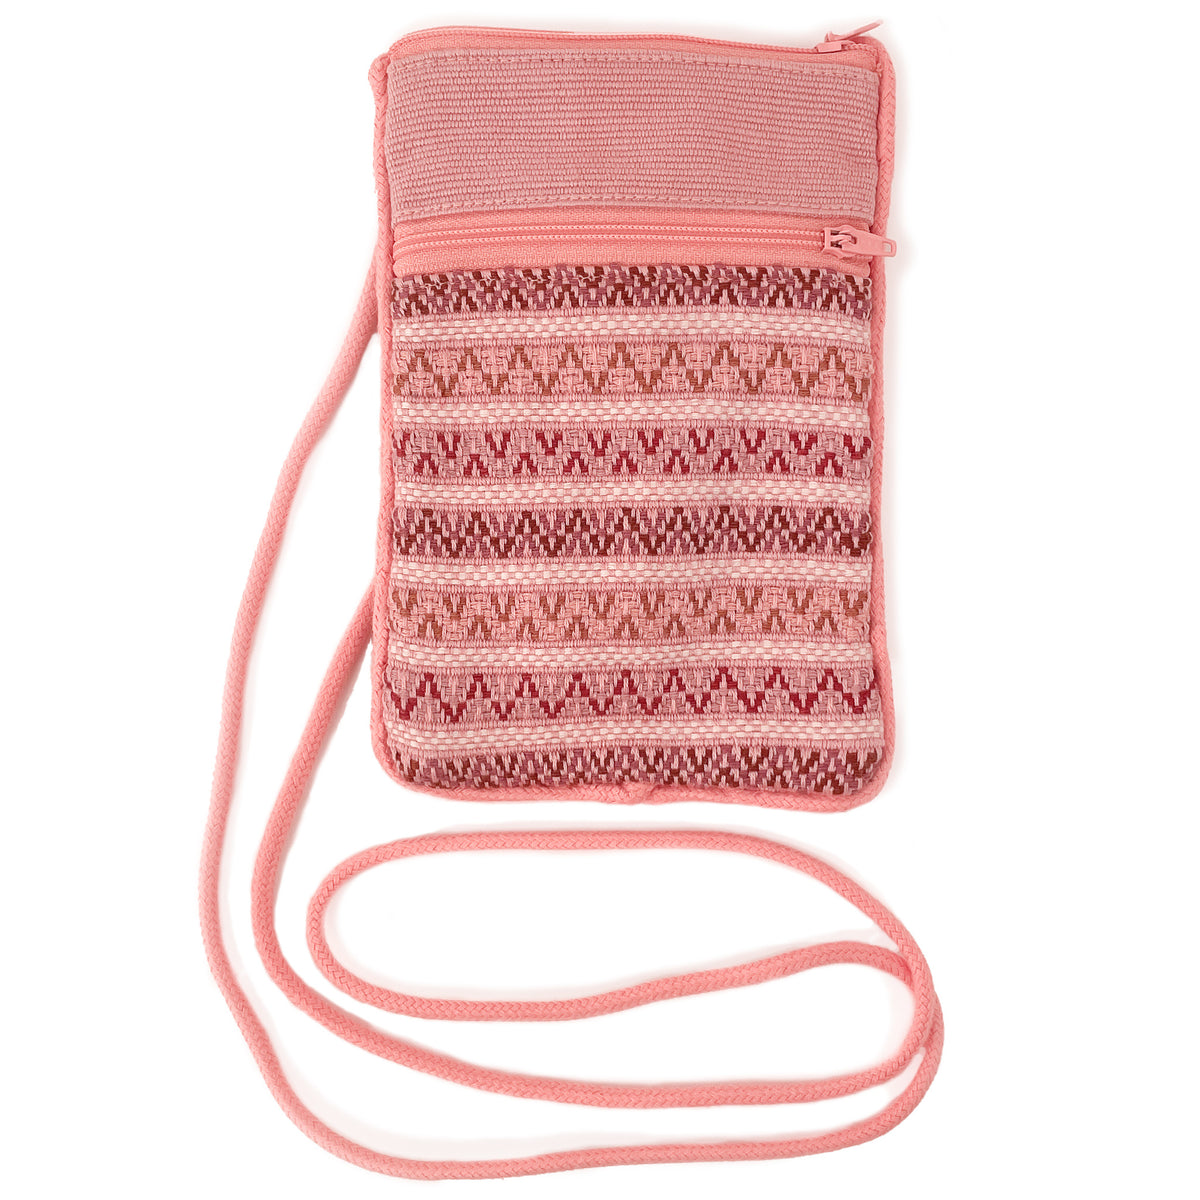 Flat lay of blush brocade cellphone bag